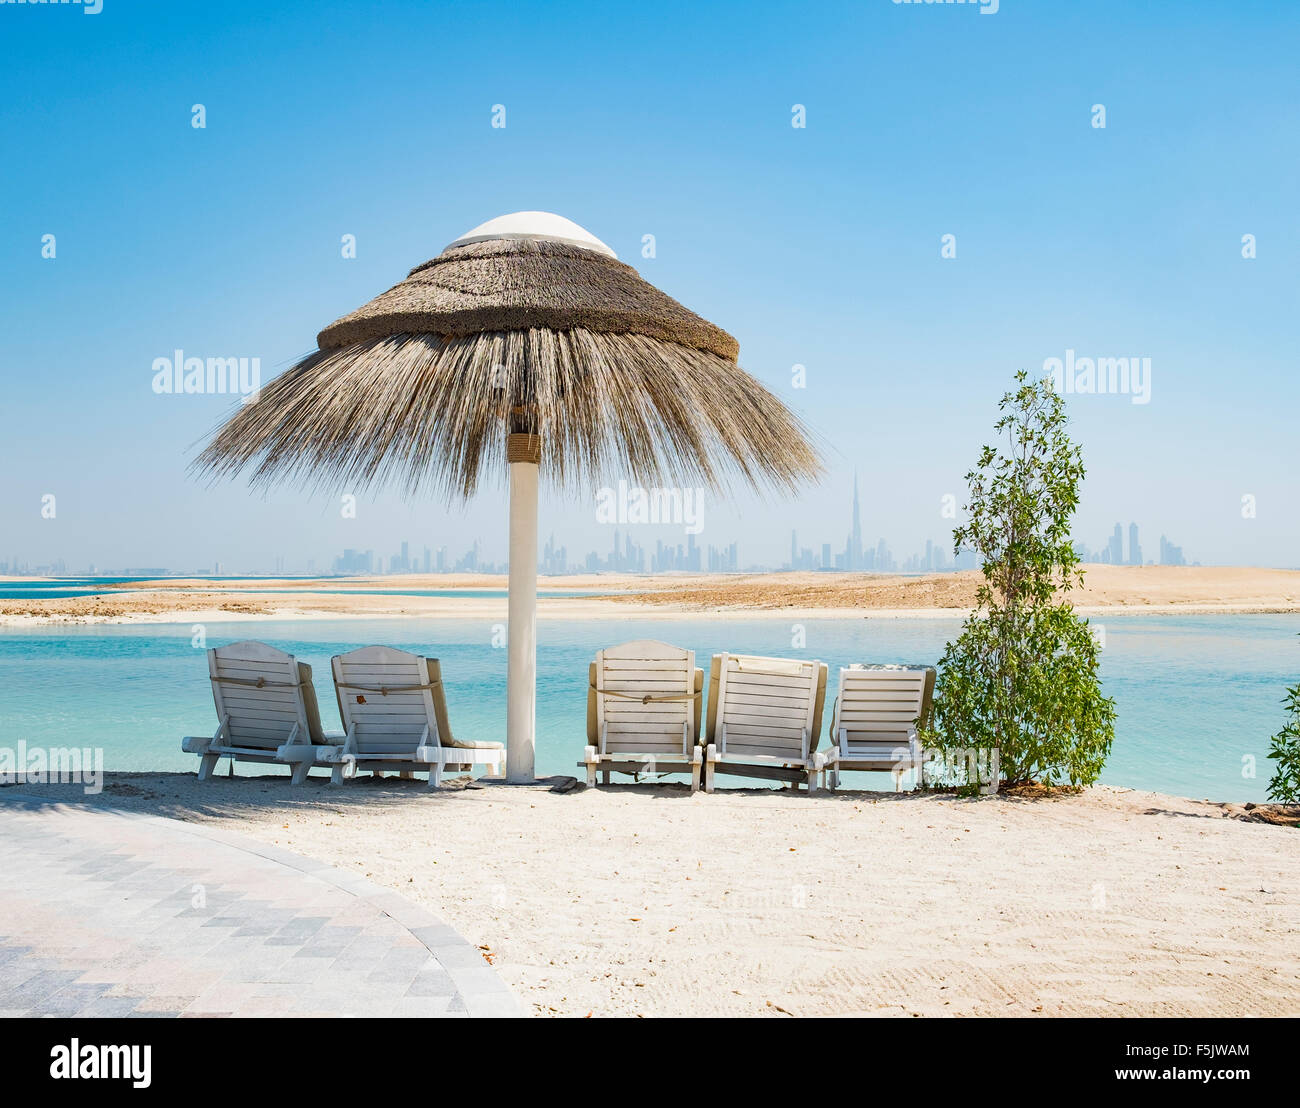 View of The Island Lebanon beach resort on a man made island, part of The World off Dubai coast in  United Arab Emirates Stock Photo